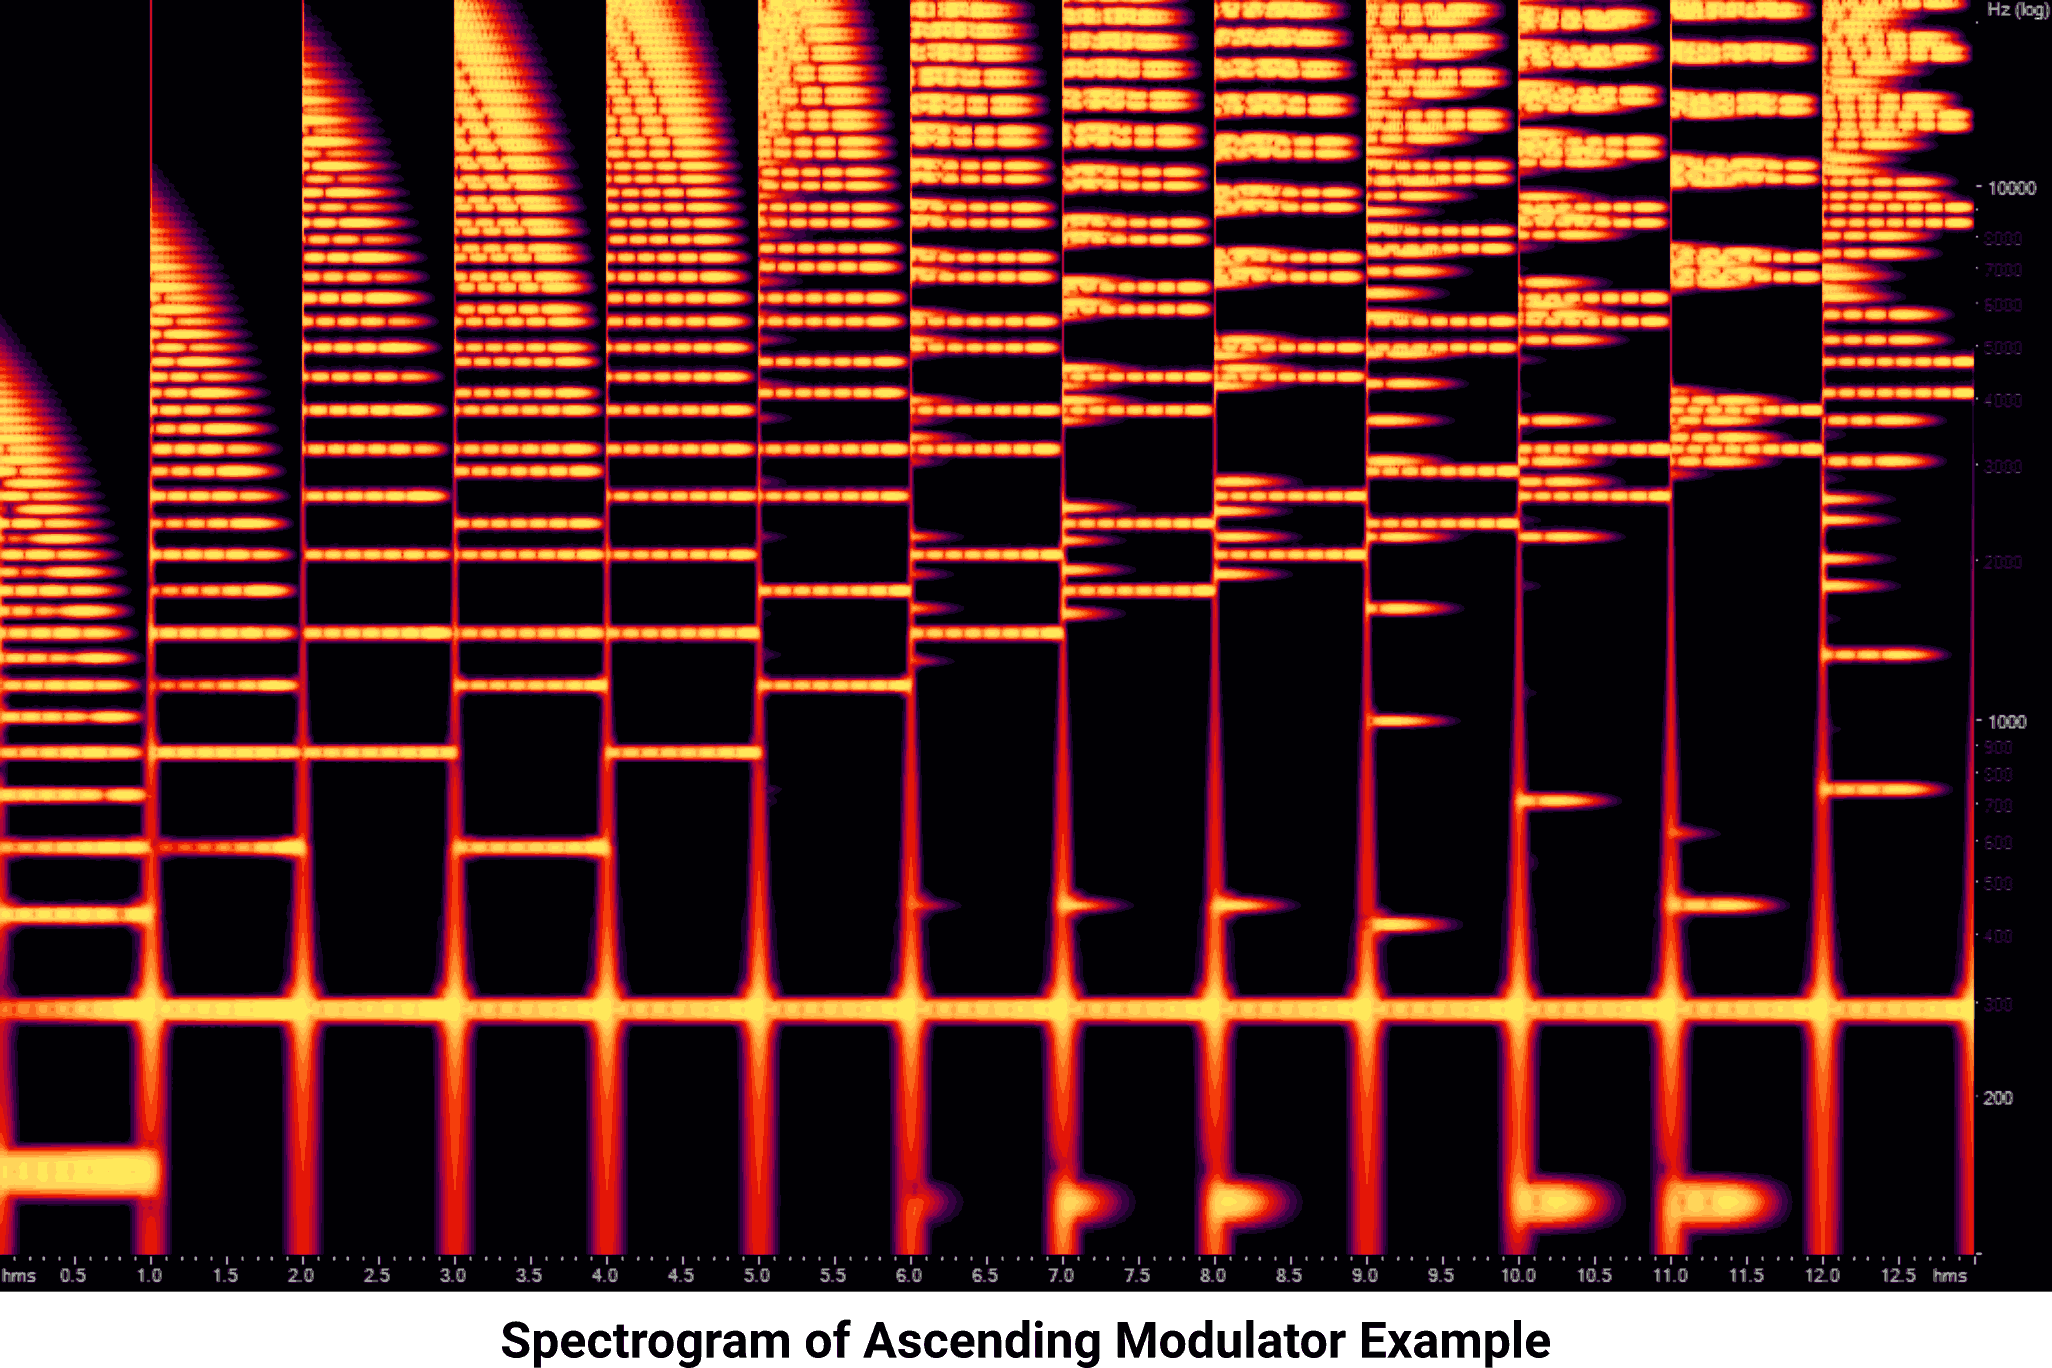 Spectrogram of the Ascending Modulator example audio.